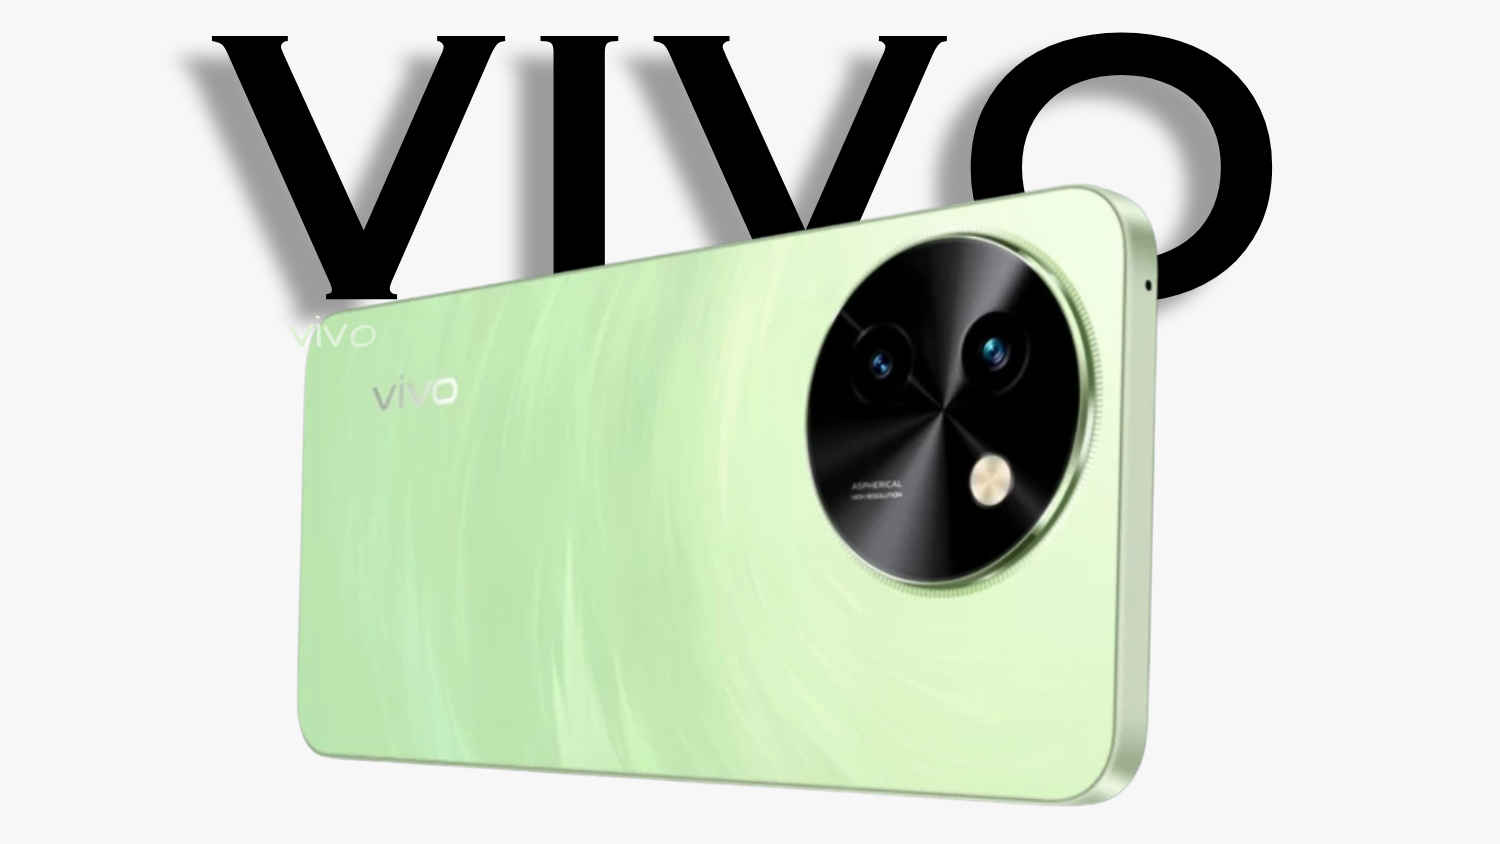 Vivo T3x 5G: India launch date, processor & more details announced